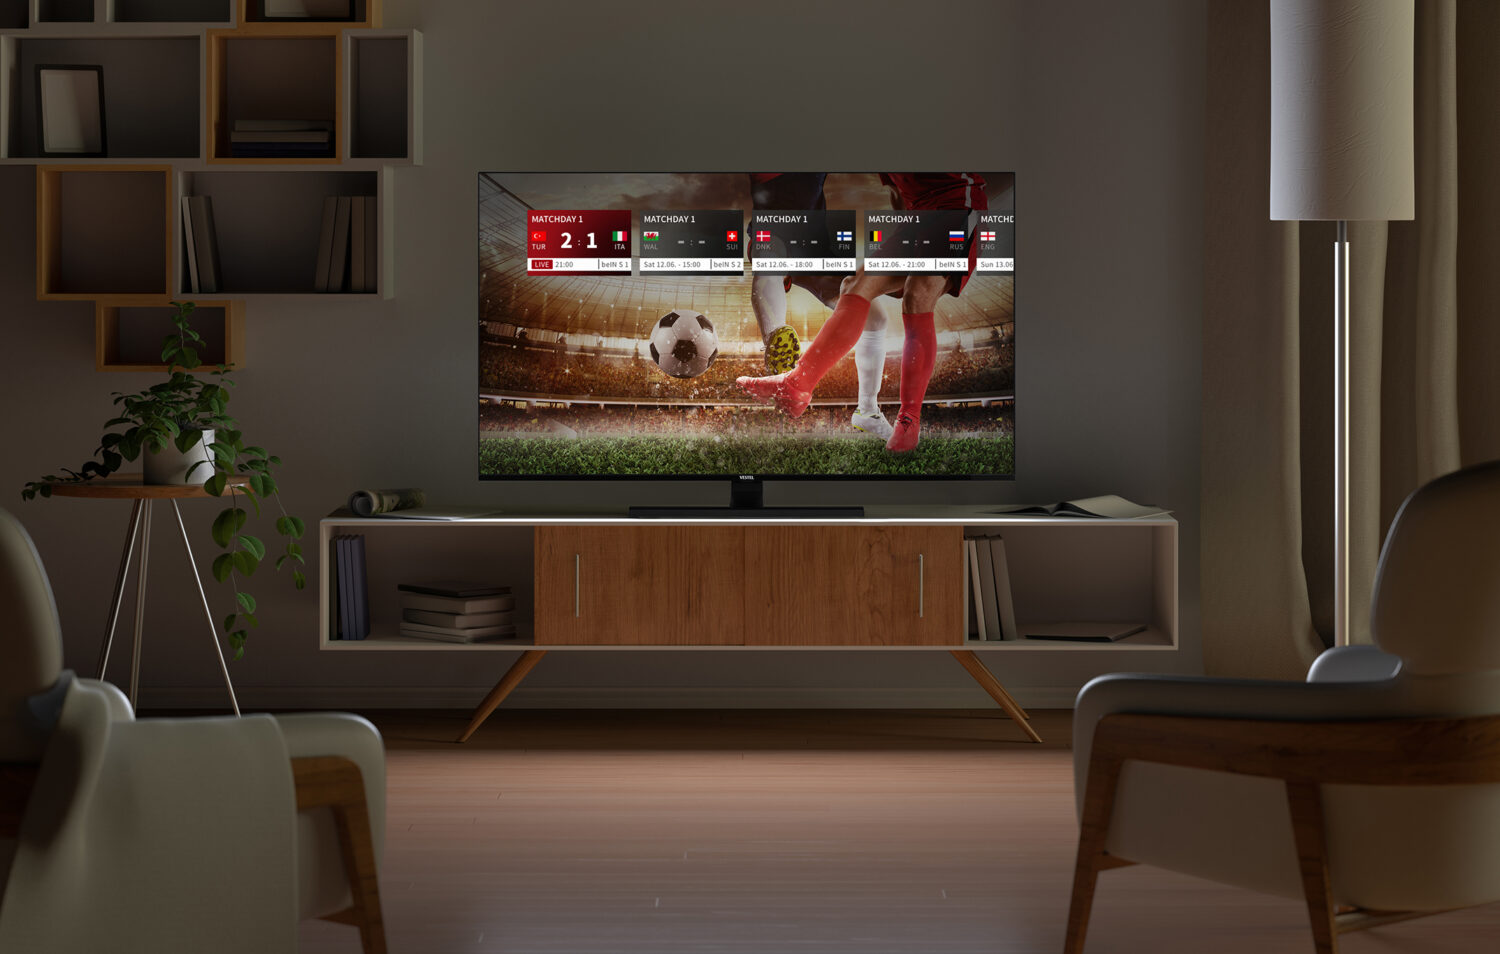 Vestel launches Football Corner app for smart TVs